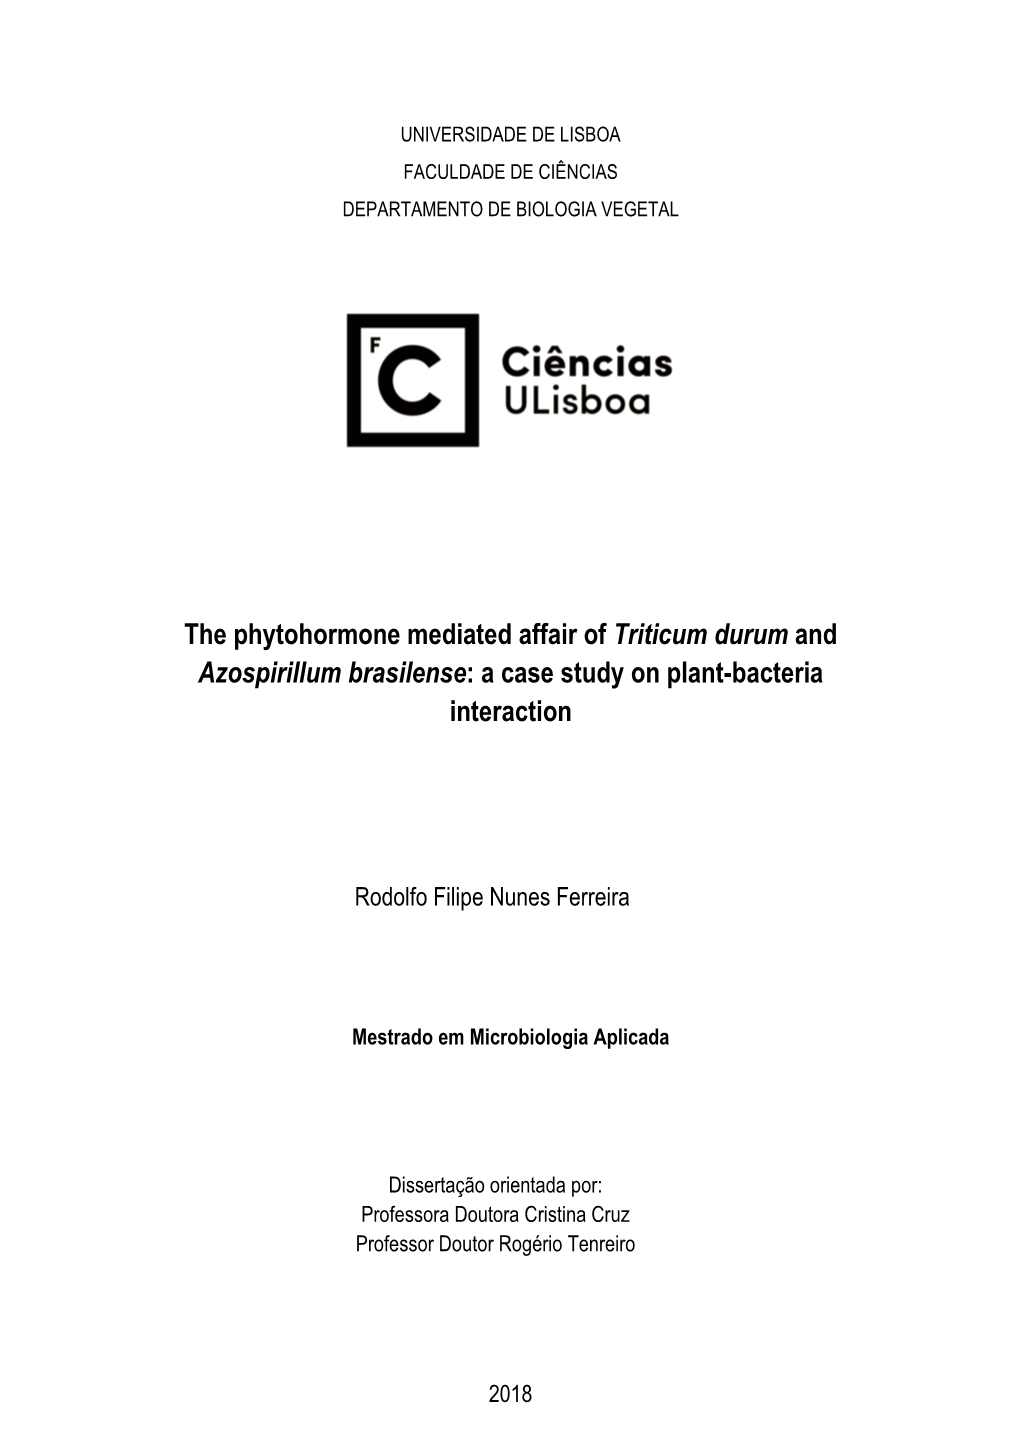 The Phytohormone Mediated Affair of Triticum Durum and Azospirillum Brasilense: a Case Study on Plant-Bacteria Interaction